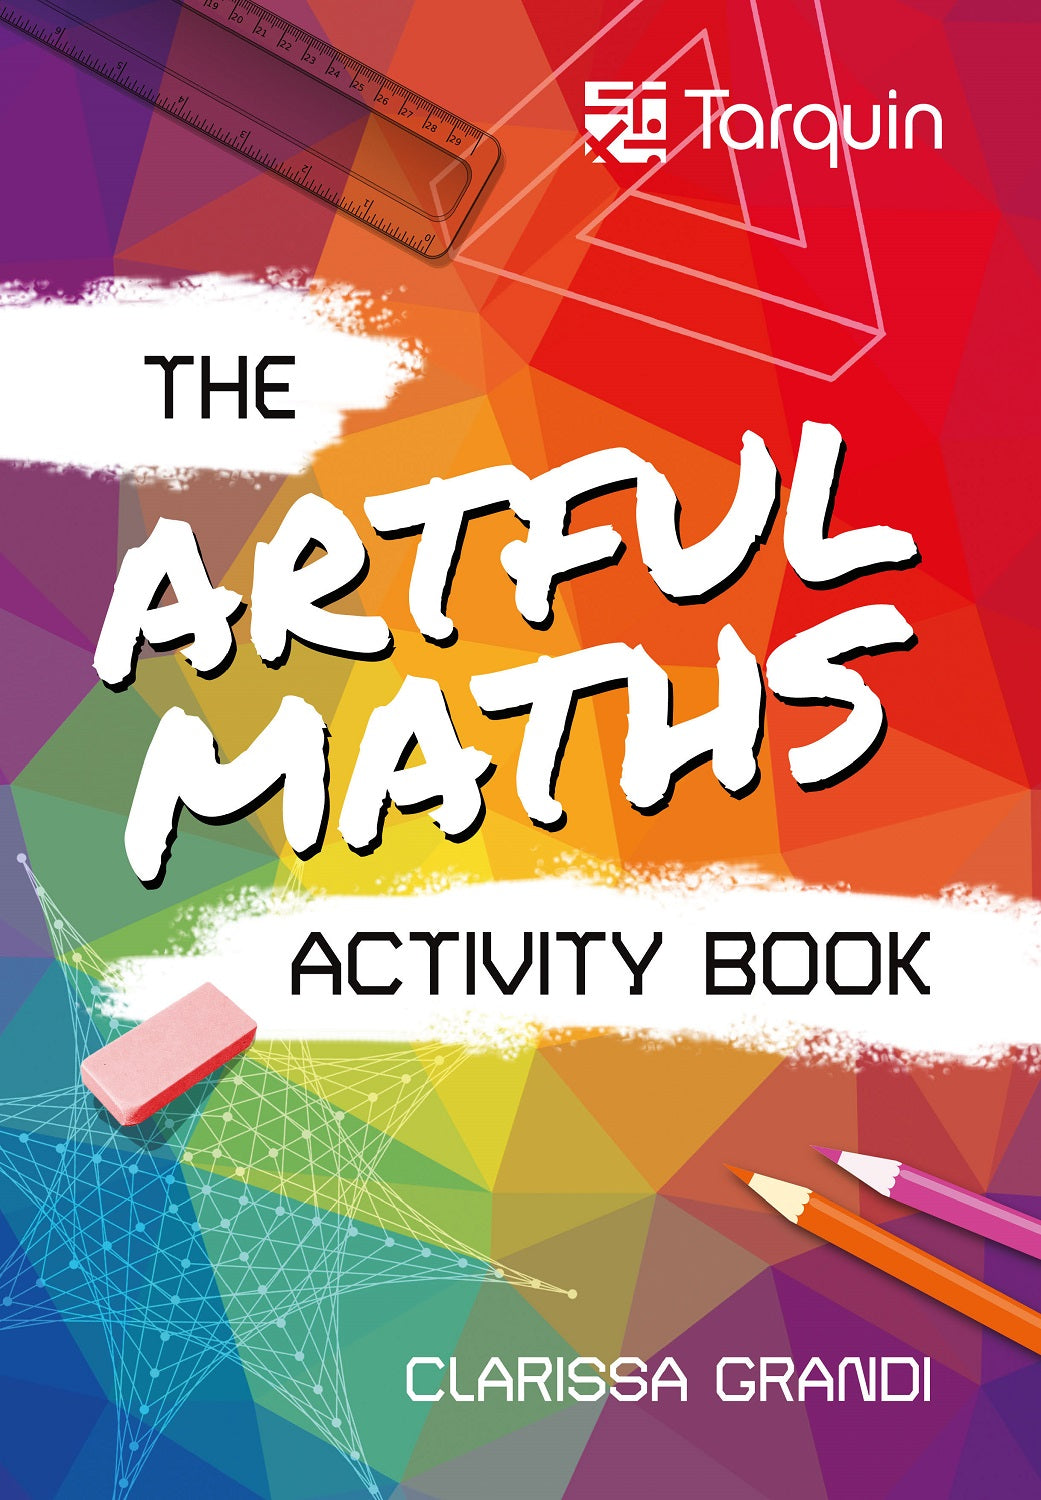 The Artful Maths Activity Book